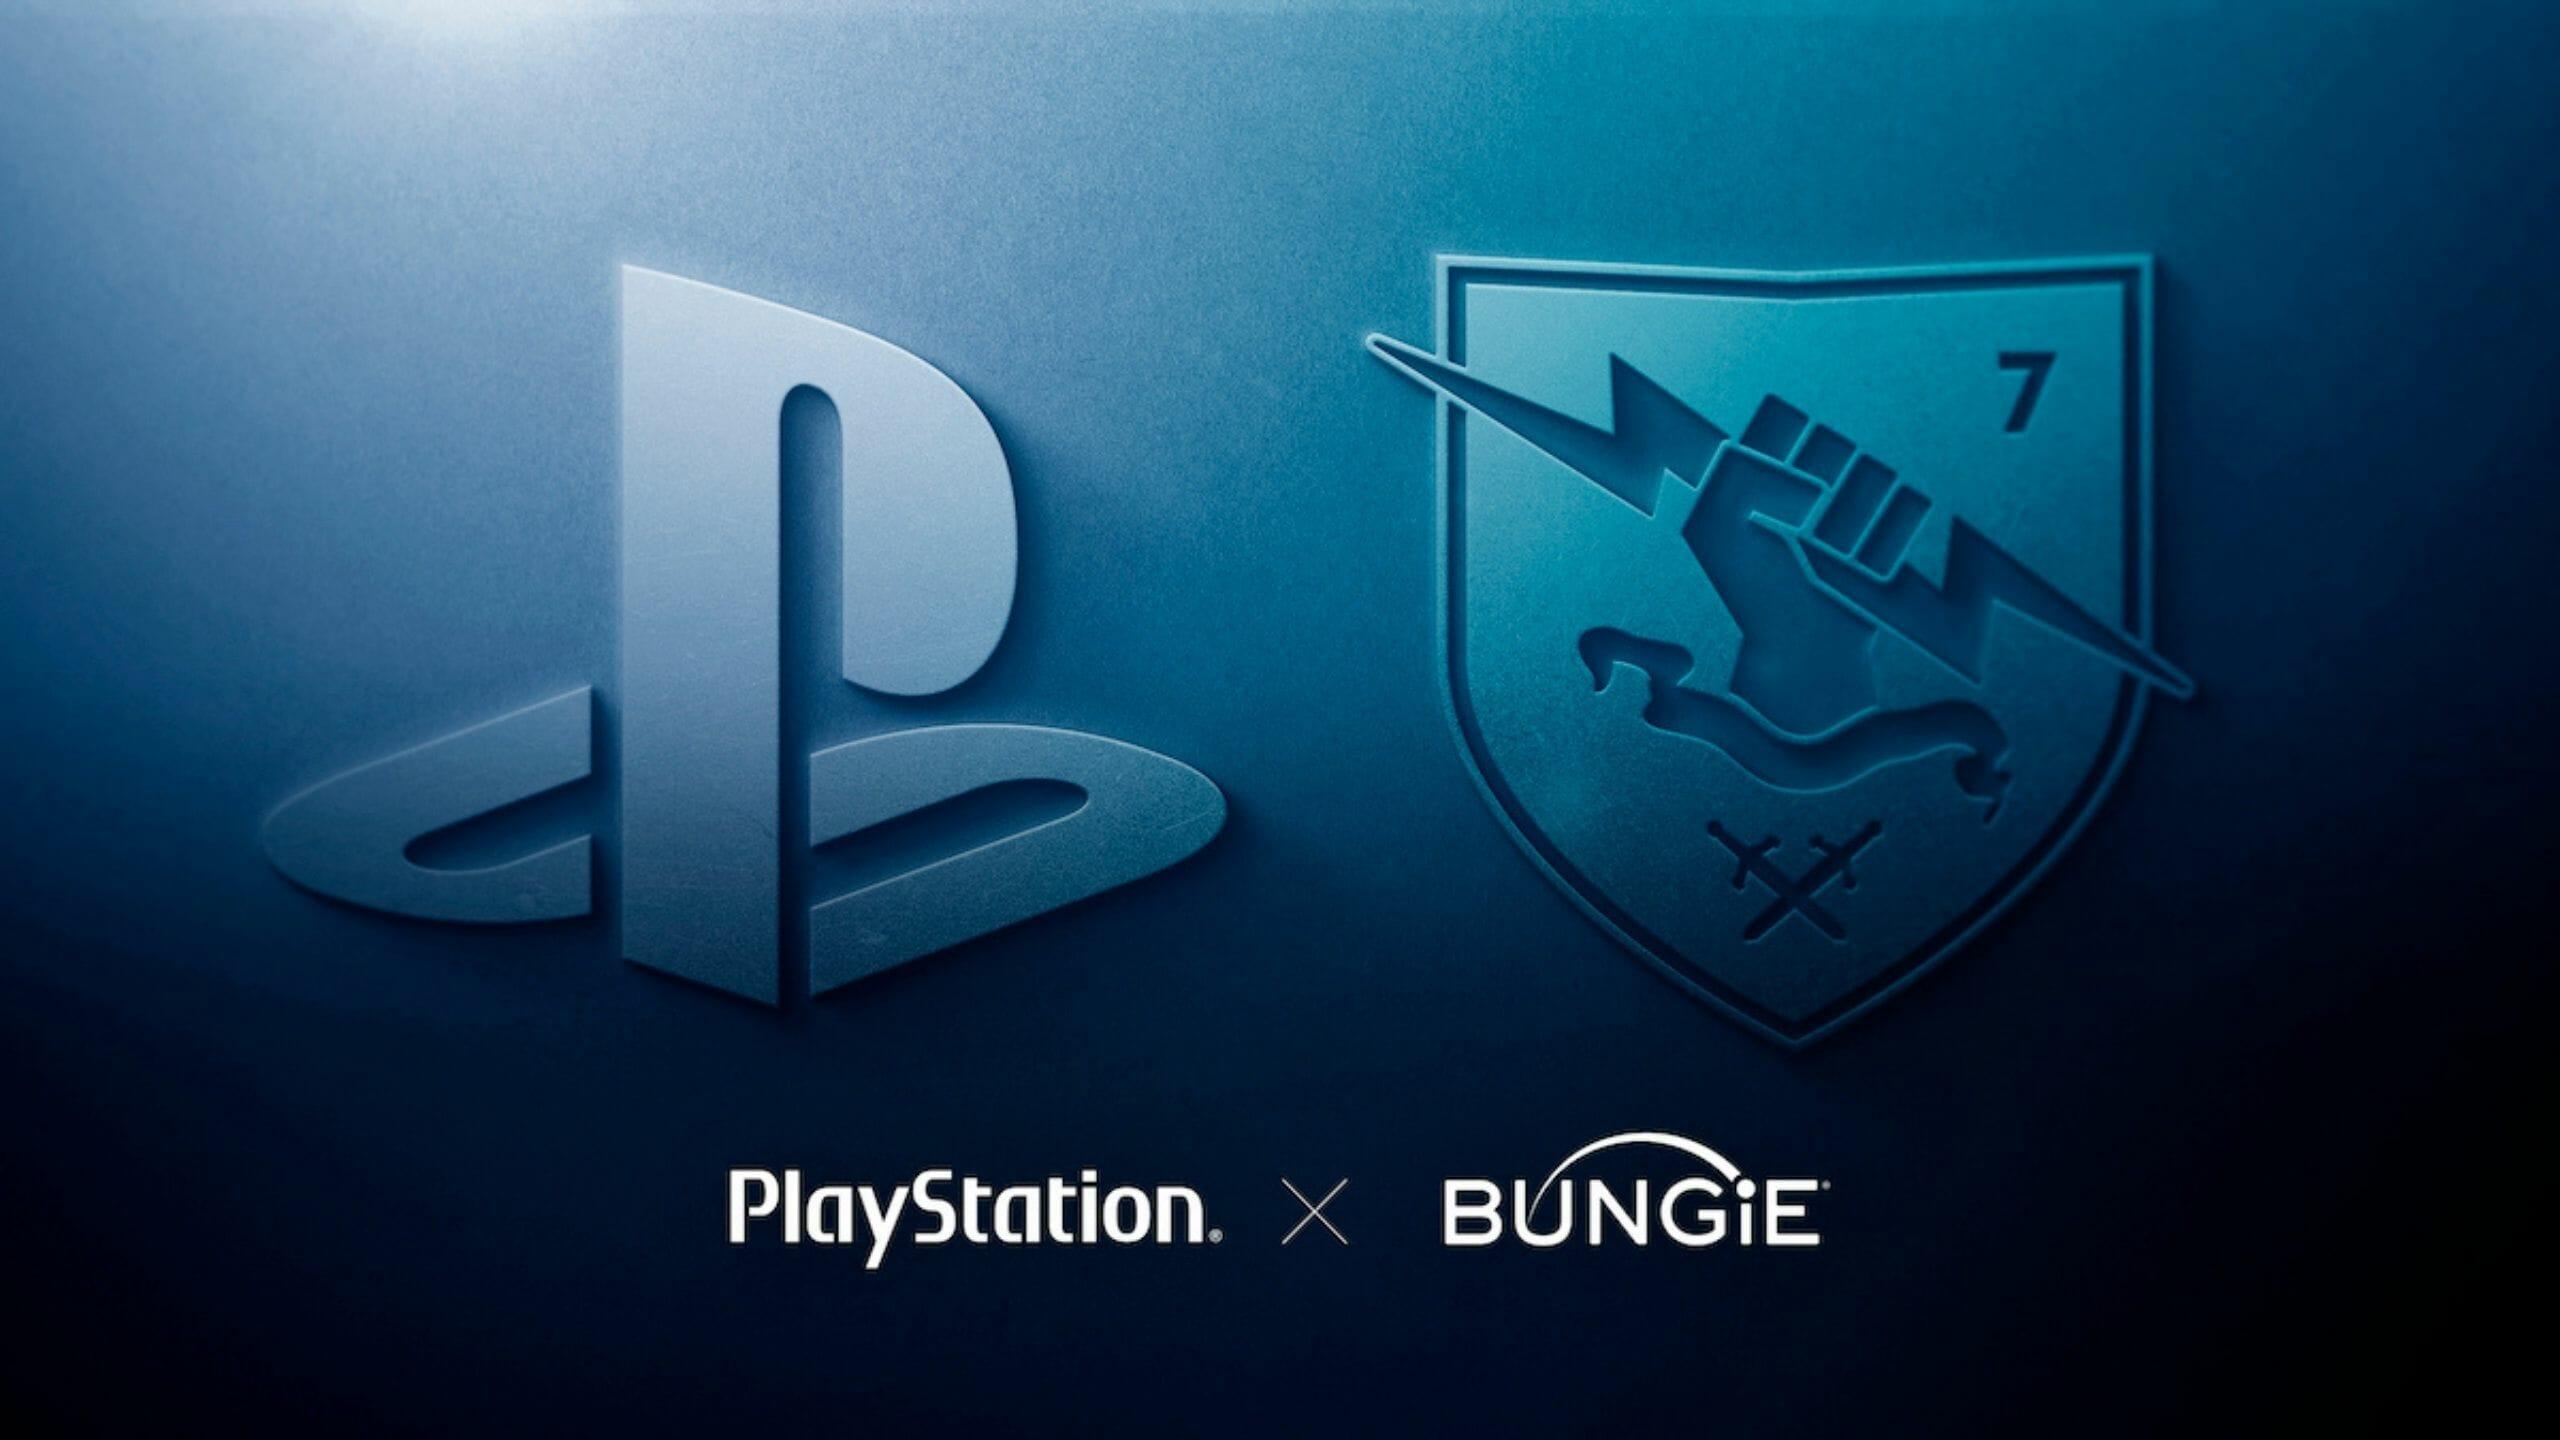 Sony acquiring Bungie